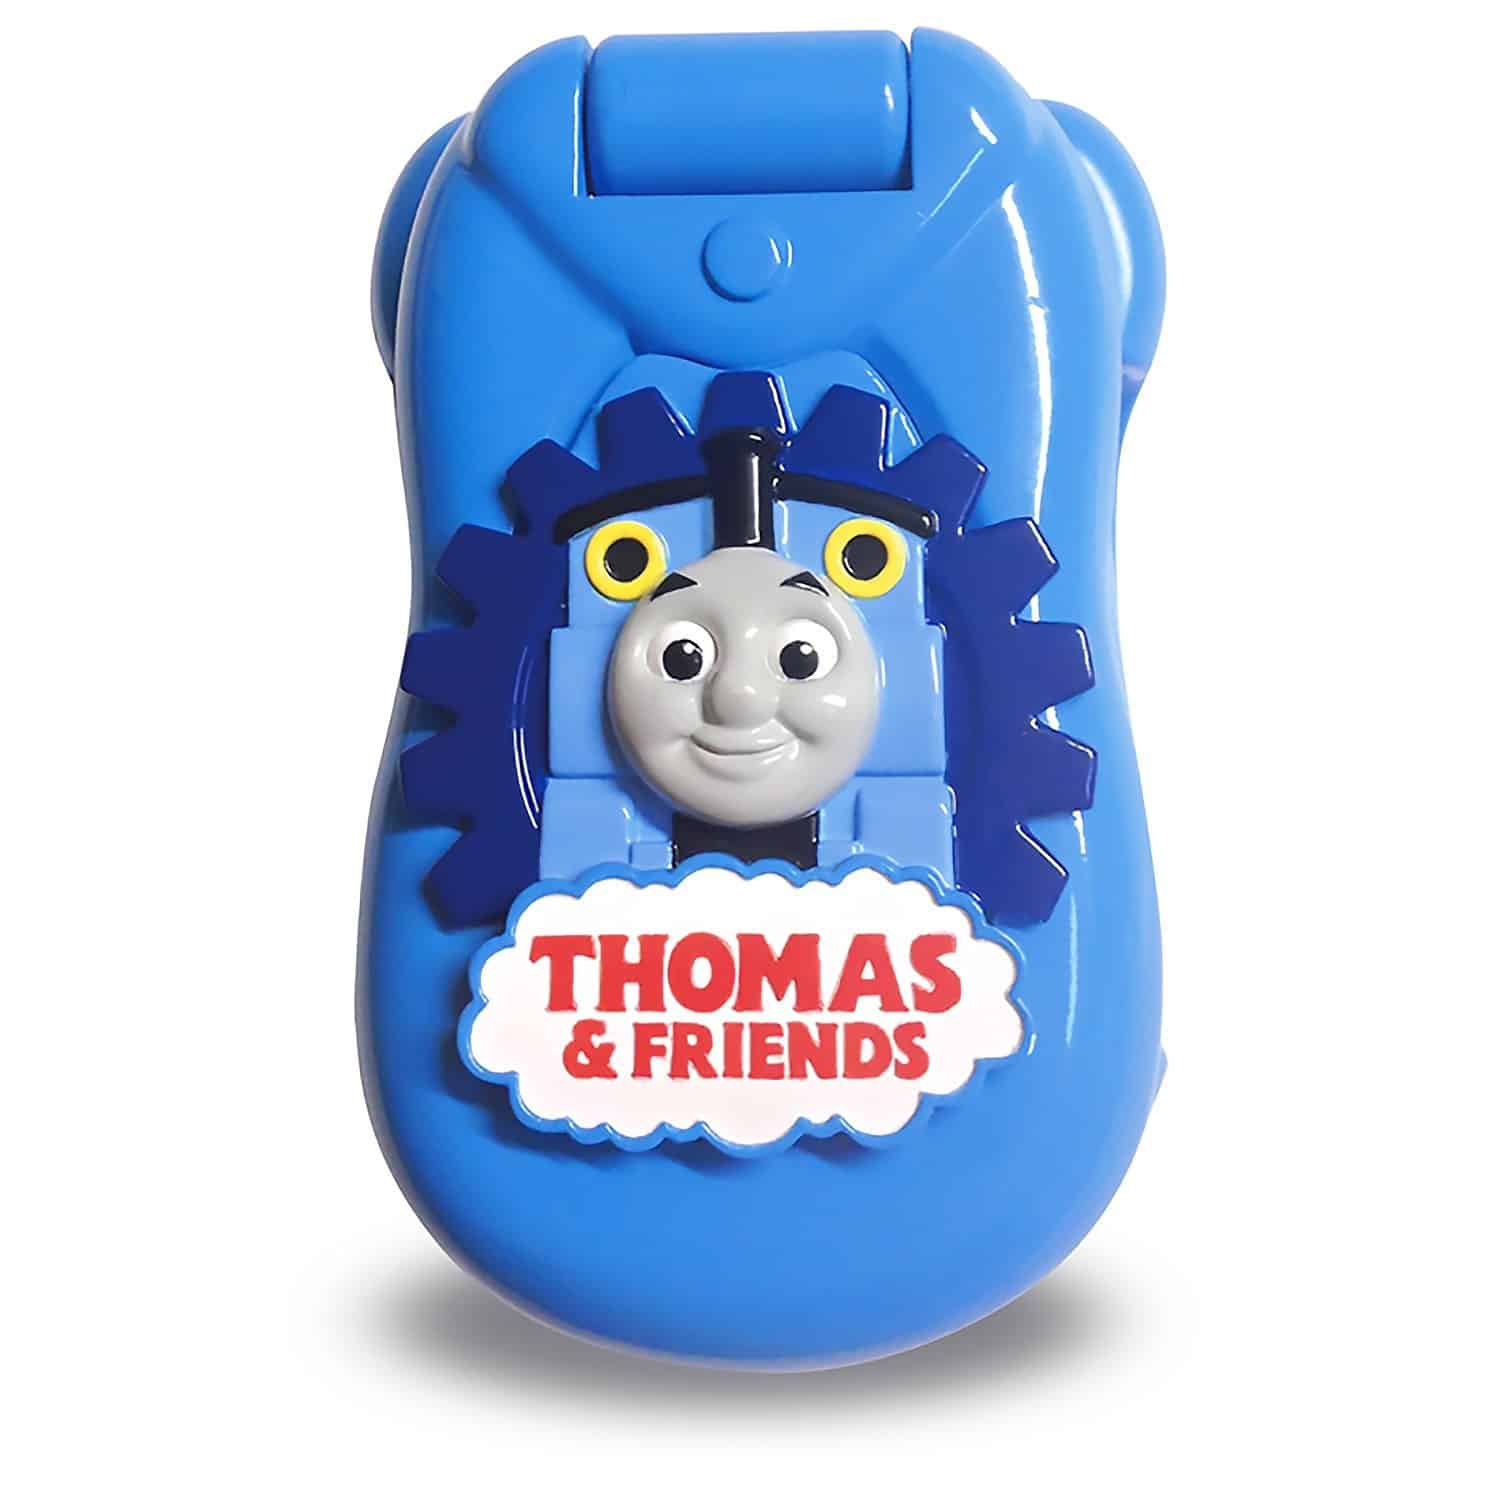 Thomas & Friends - Flip & Learn Phone